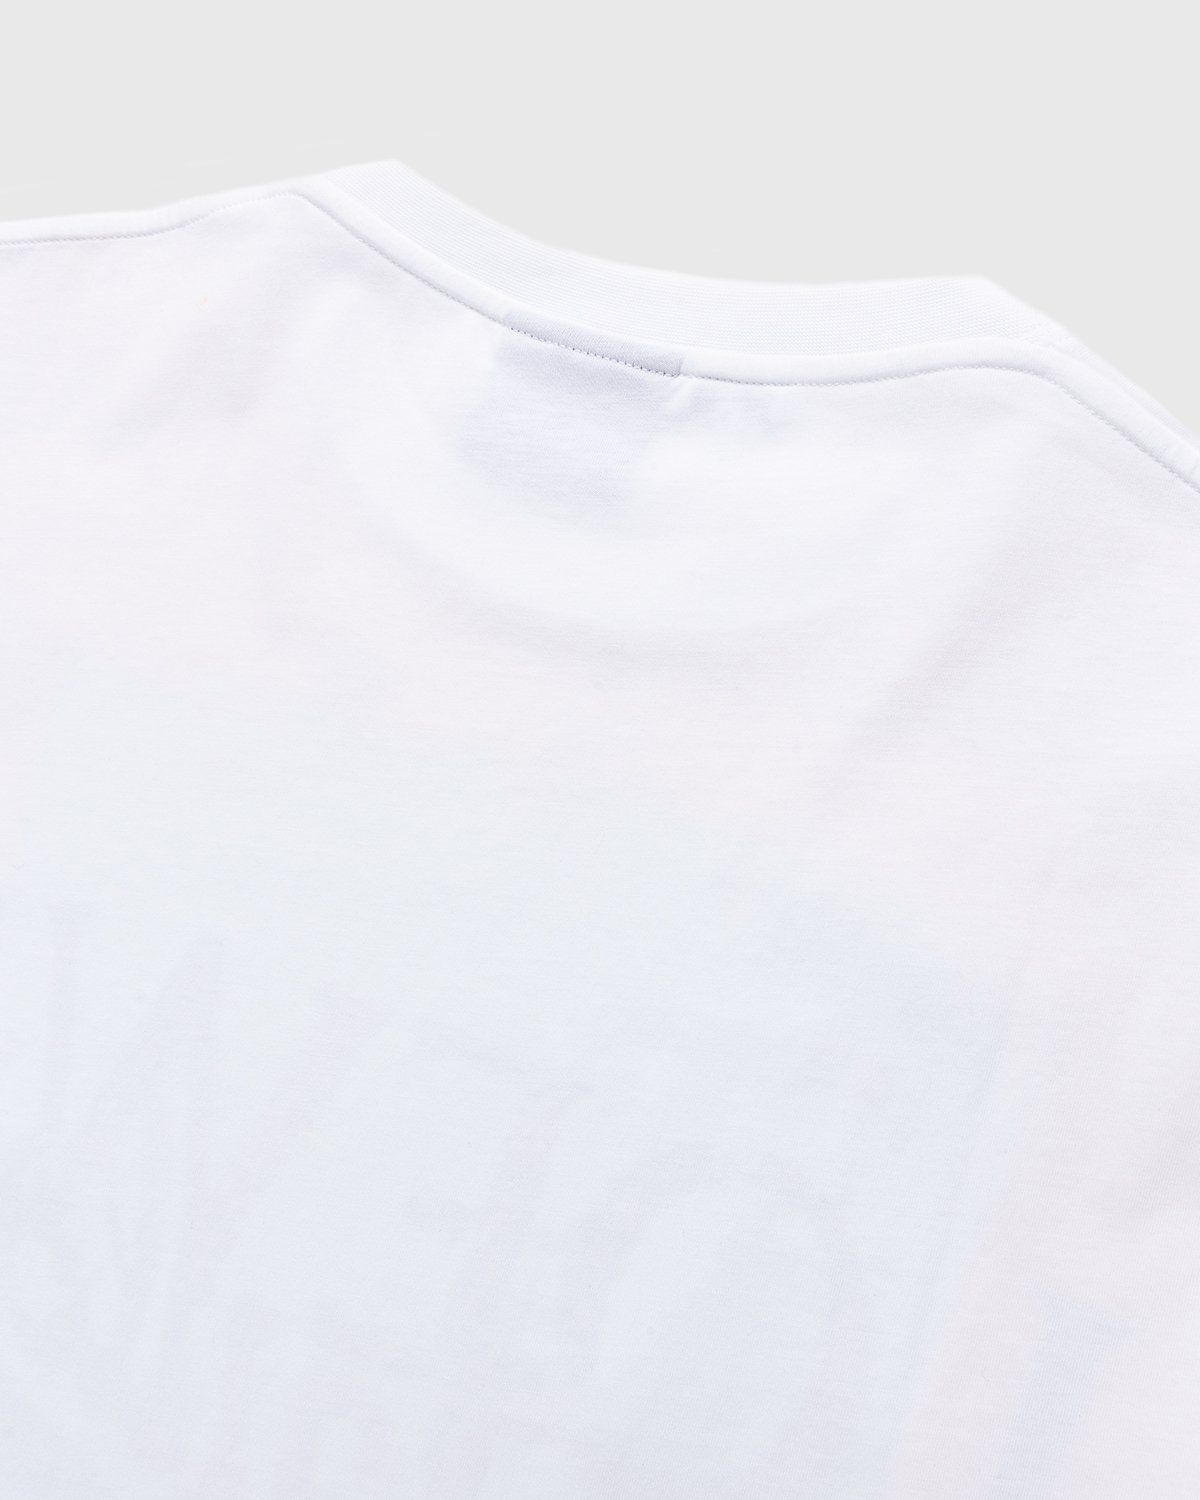 Loewe – Paula's Ibiza Palm Print T-Shirt White/Multi - Tops - Multi - Image 5